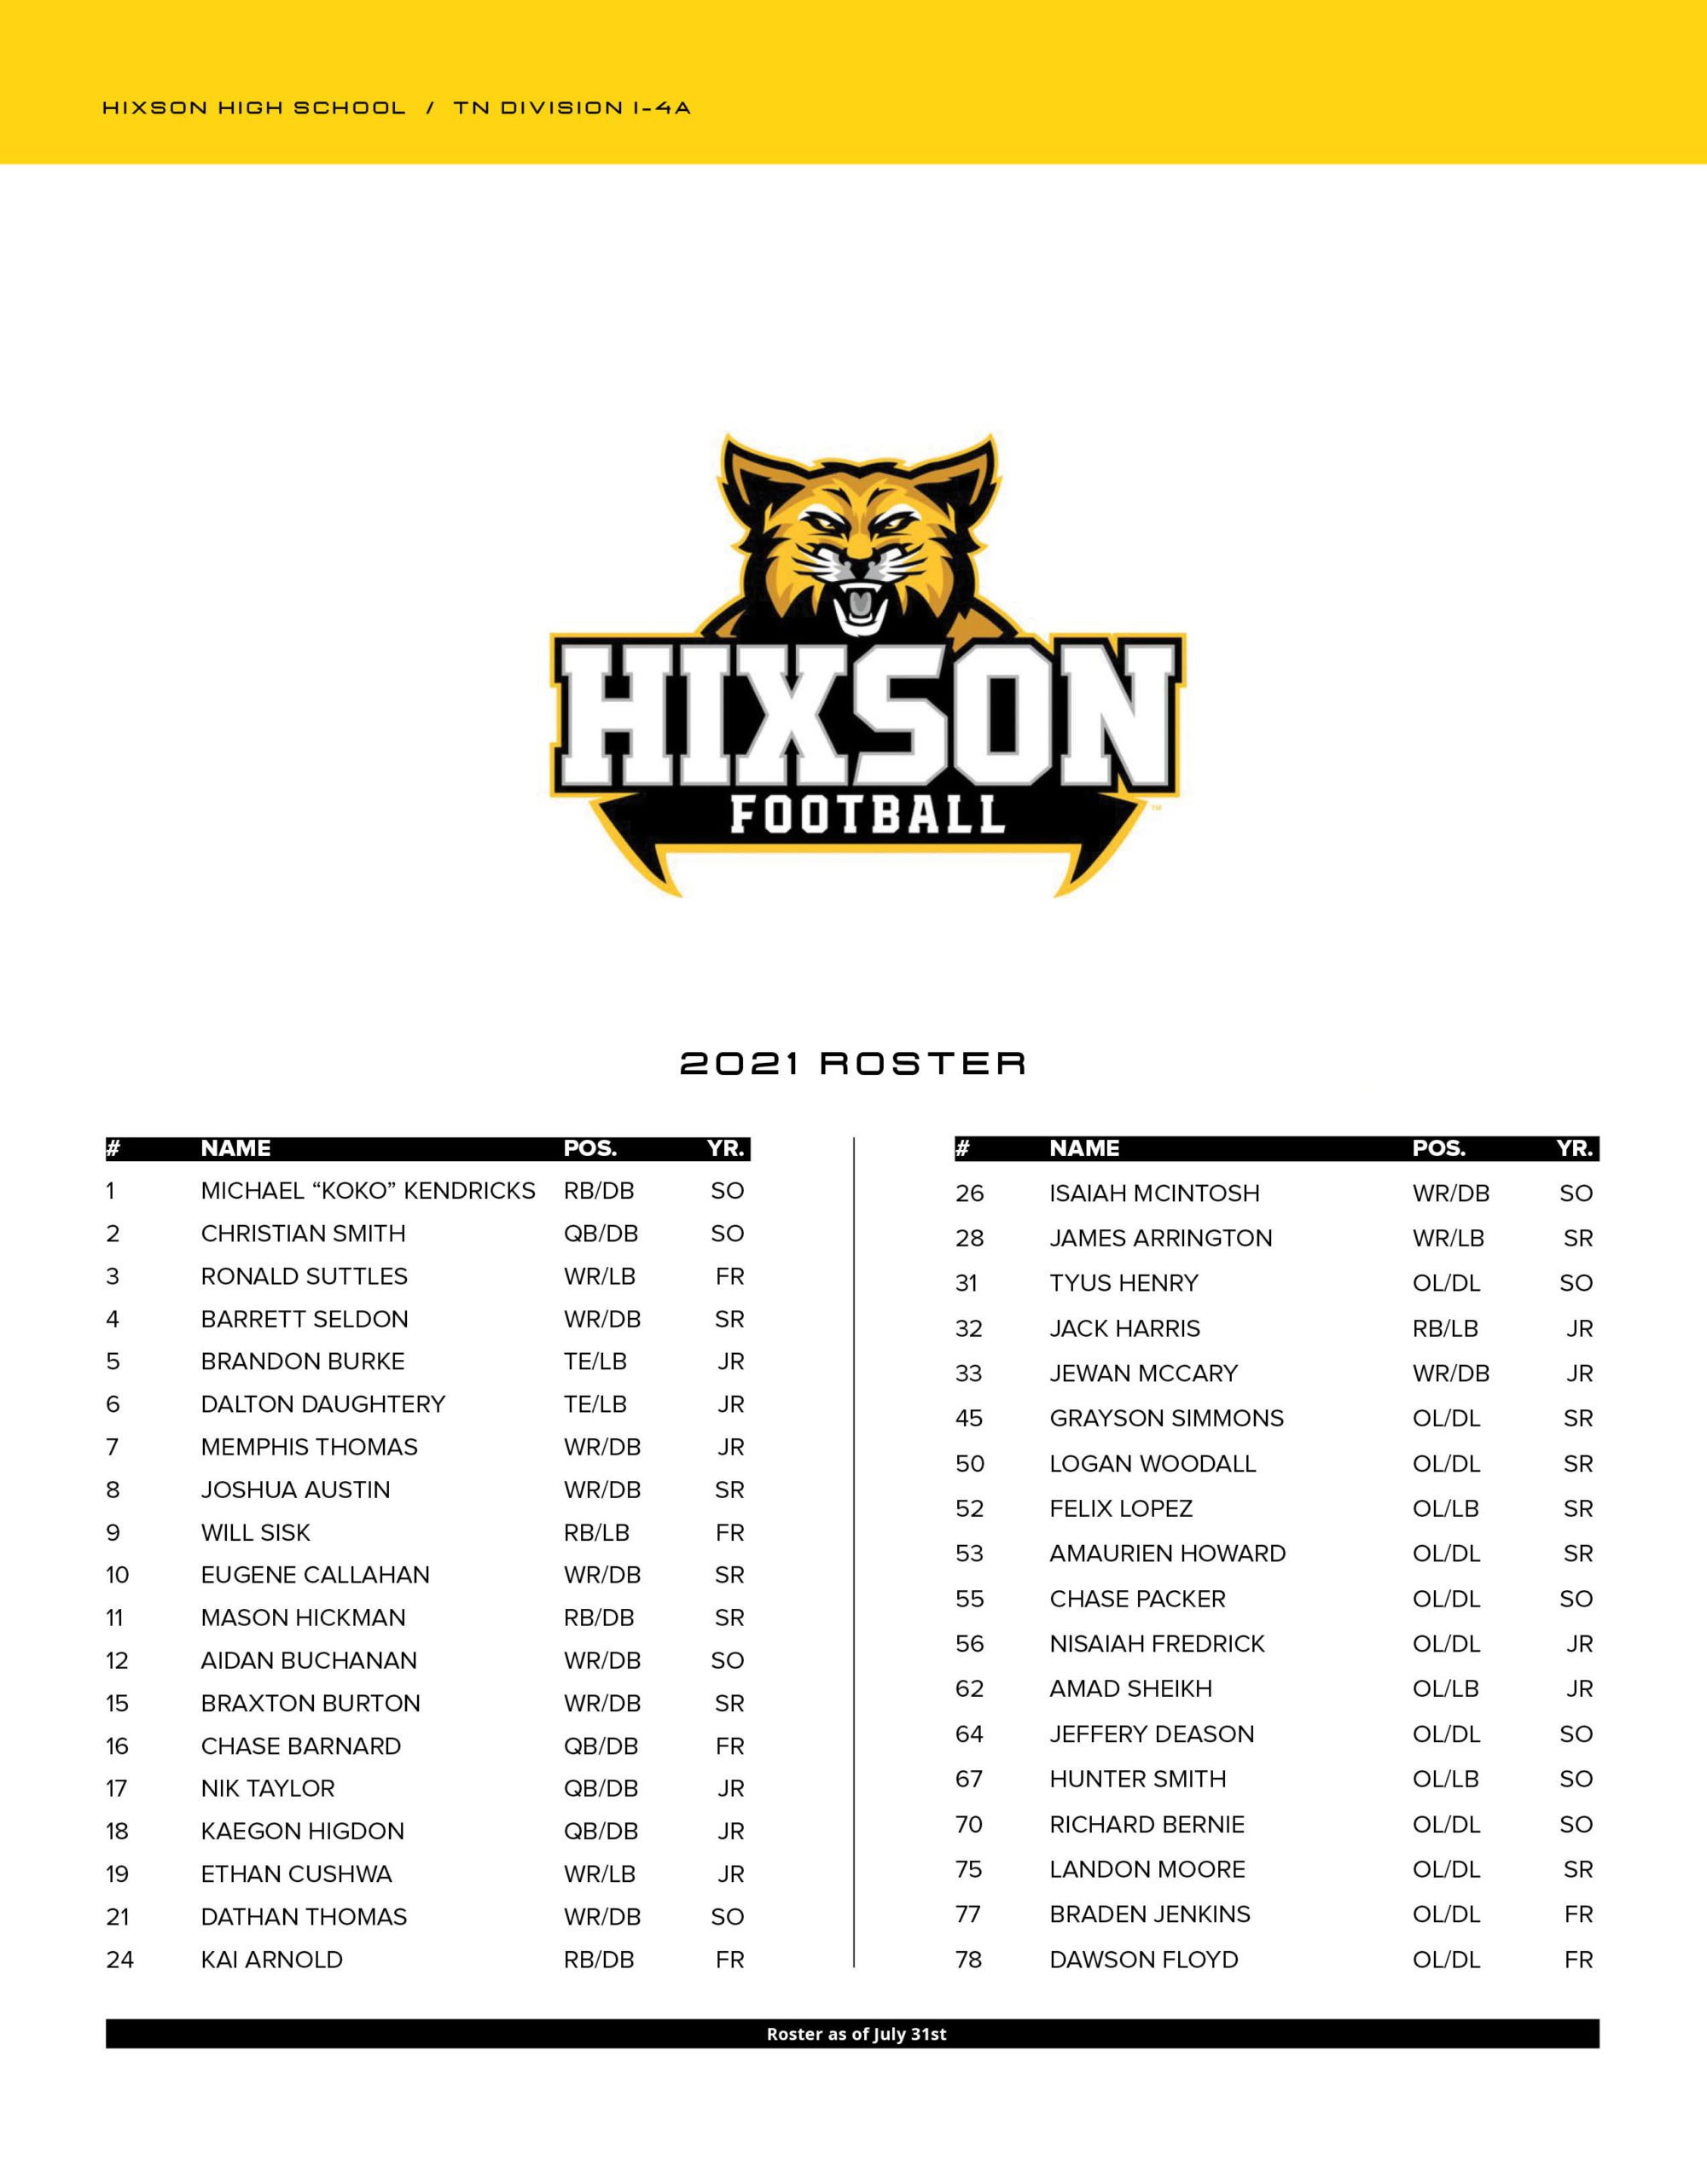 Hixson high school football roster